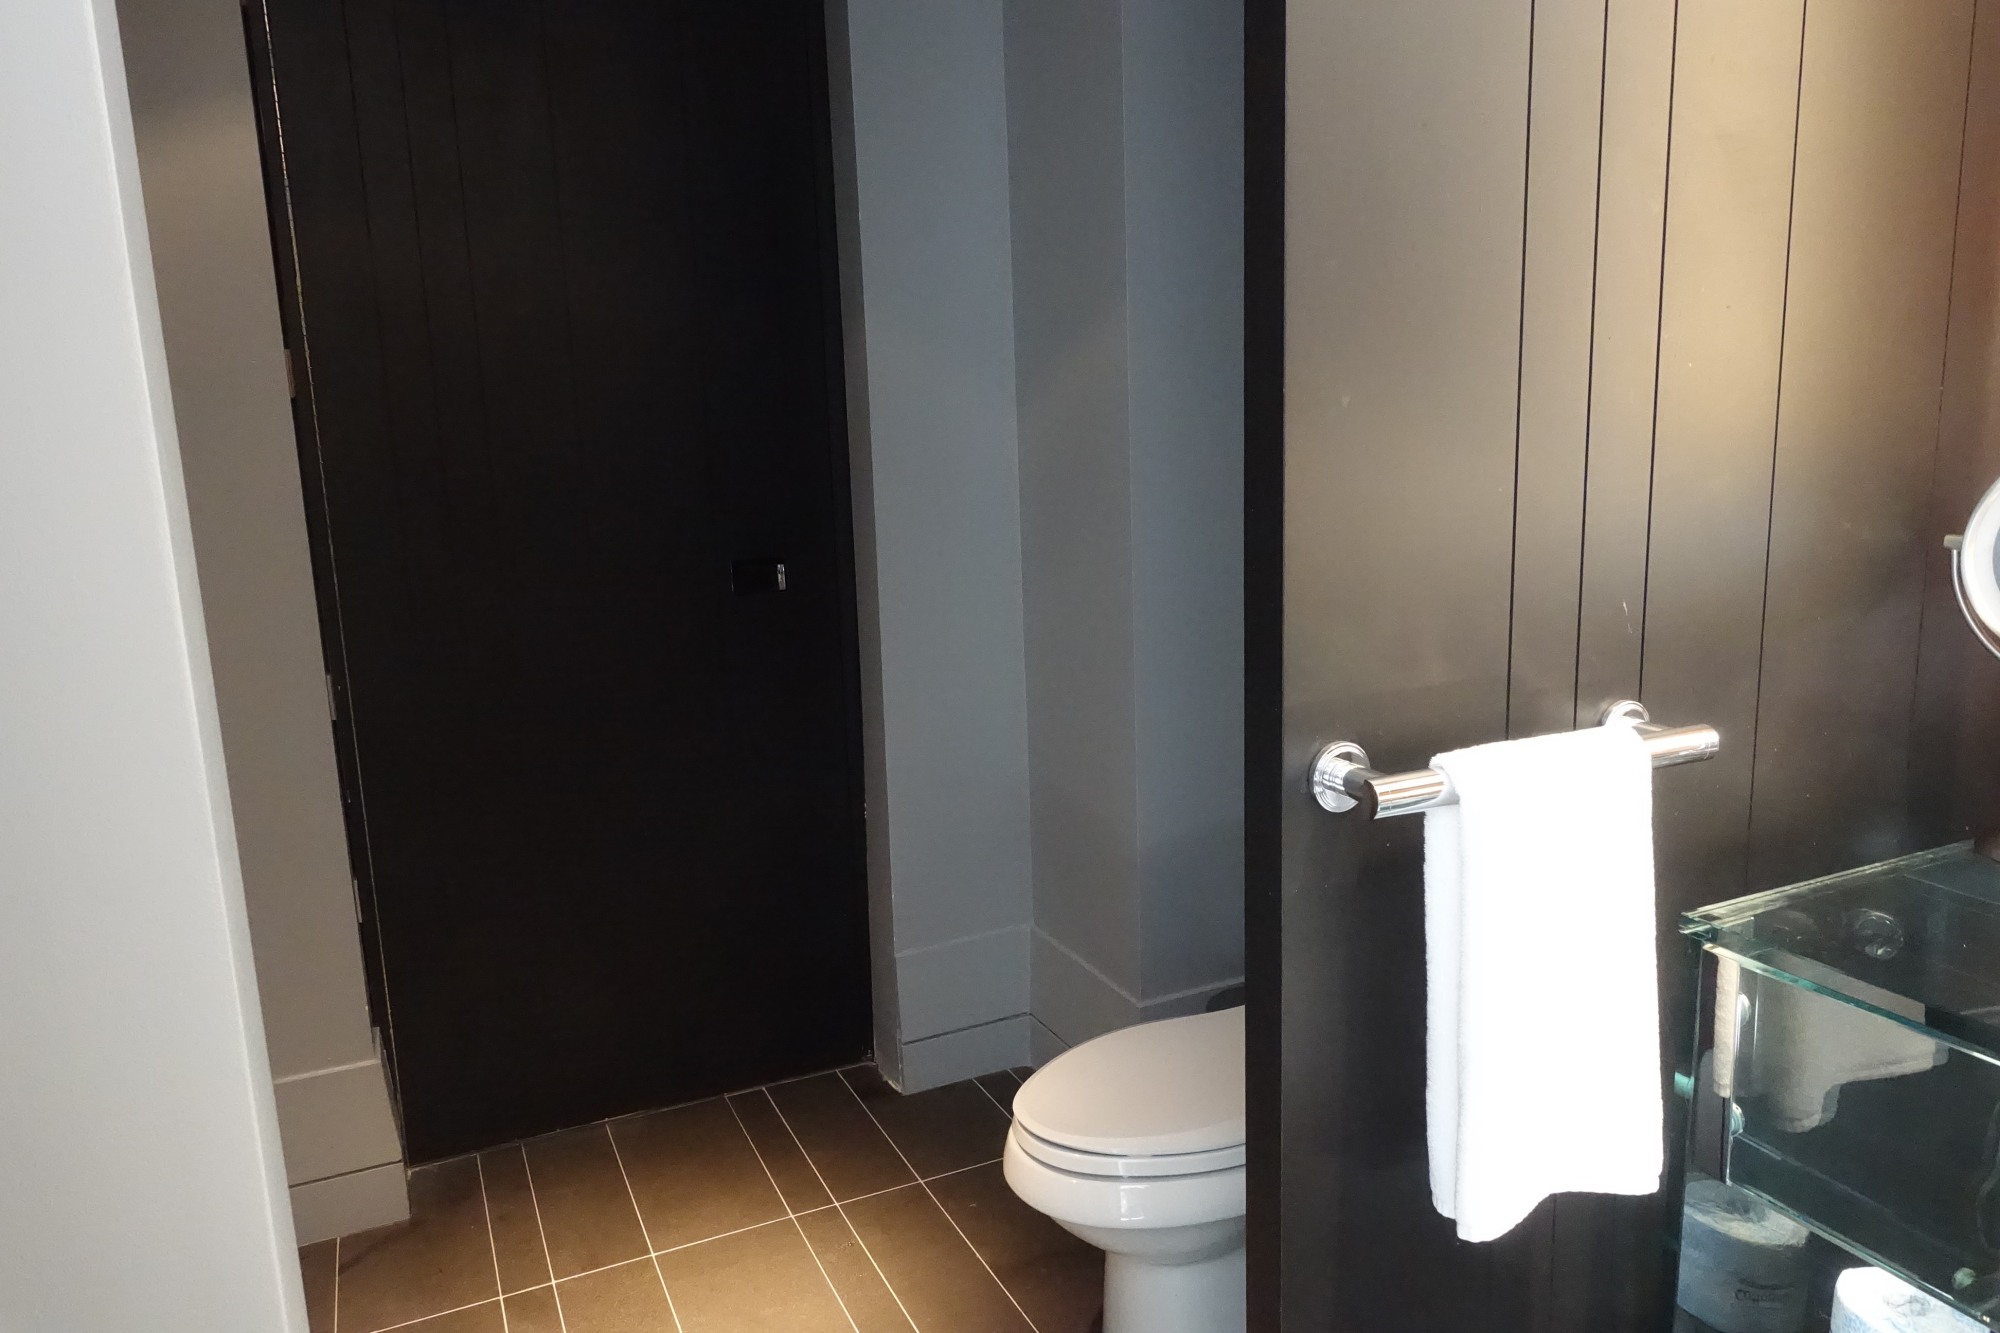 No Toilet Door, Andaz 5th Avenue Review